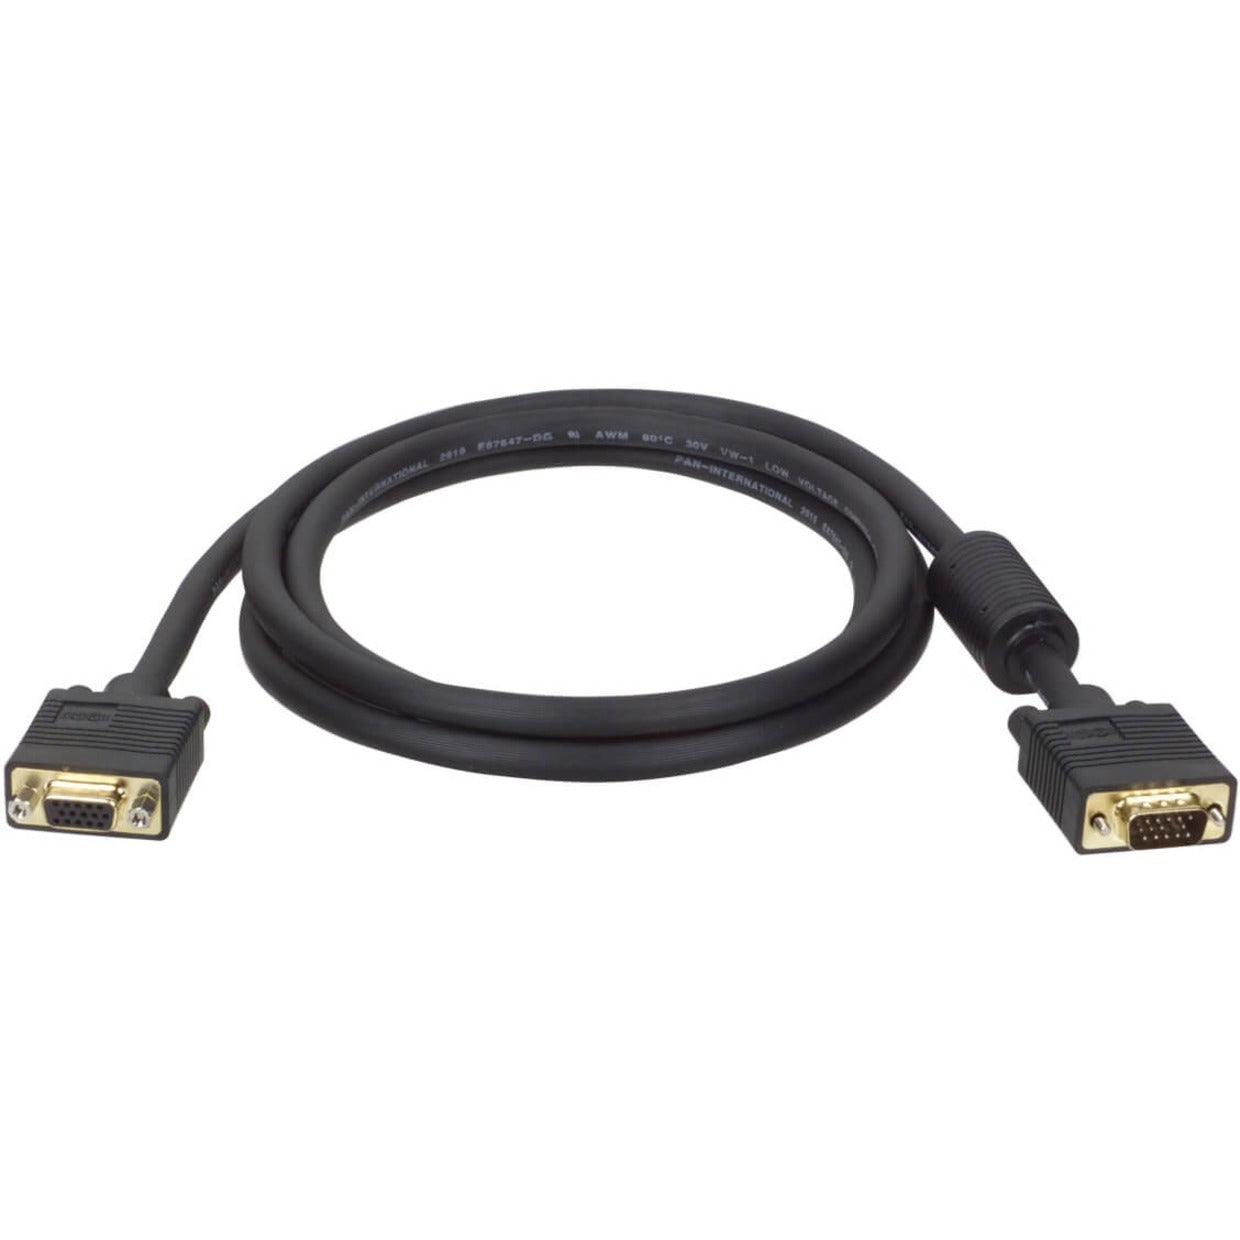 Tripp Lite P500-006 Cable de extensión para monitores VGA/SVGA 6 pies. Conectores dorados HD15M a HD15F